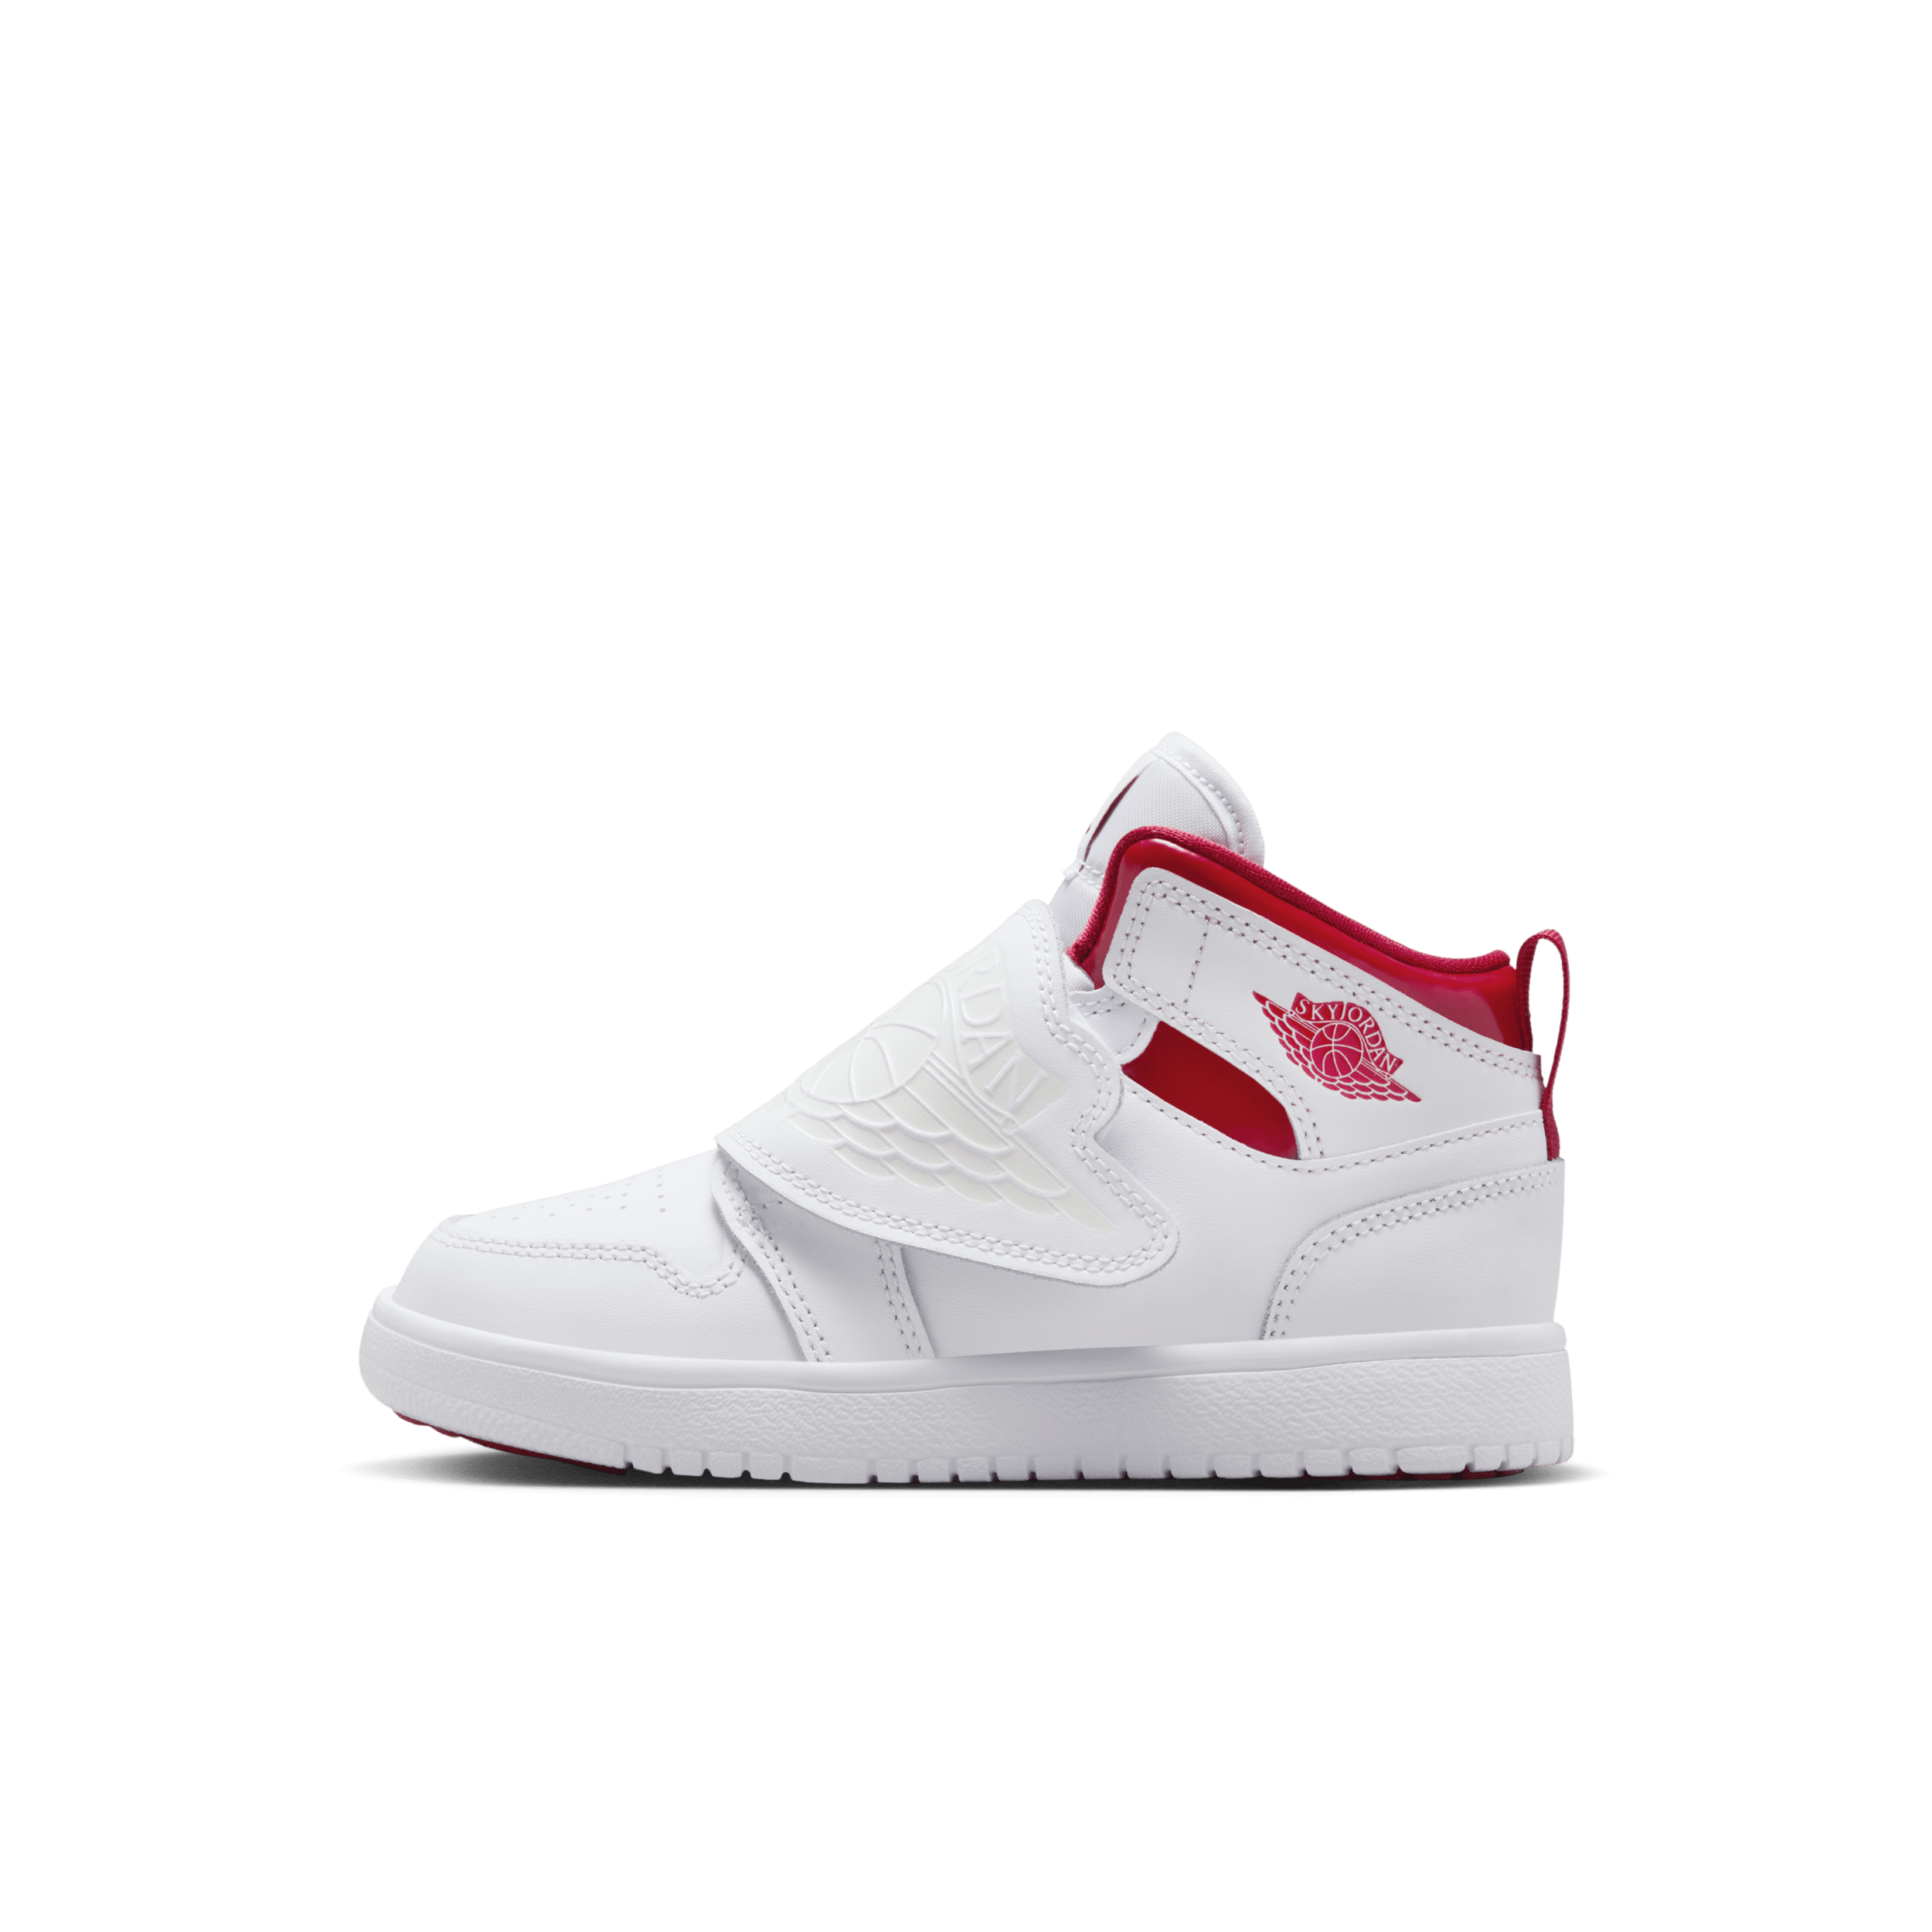 Nike Sky Jordan 1 Zapatillas - Niño/a pequeño/a - Blanco